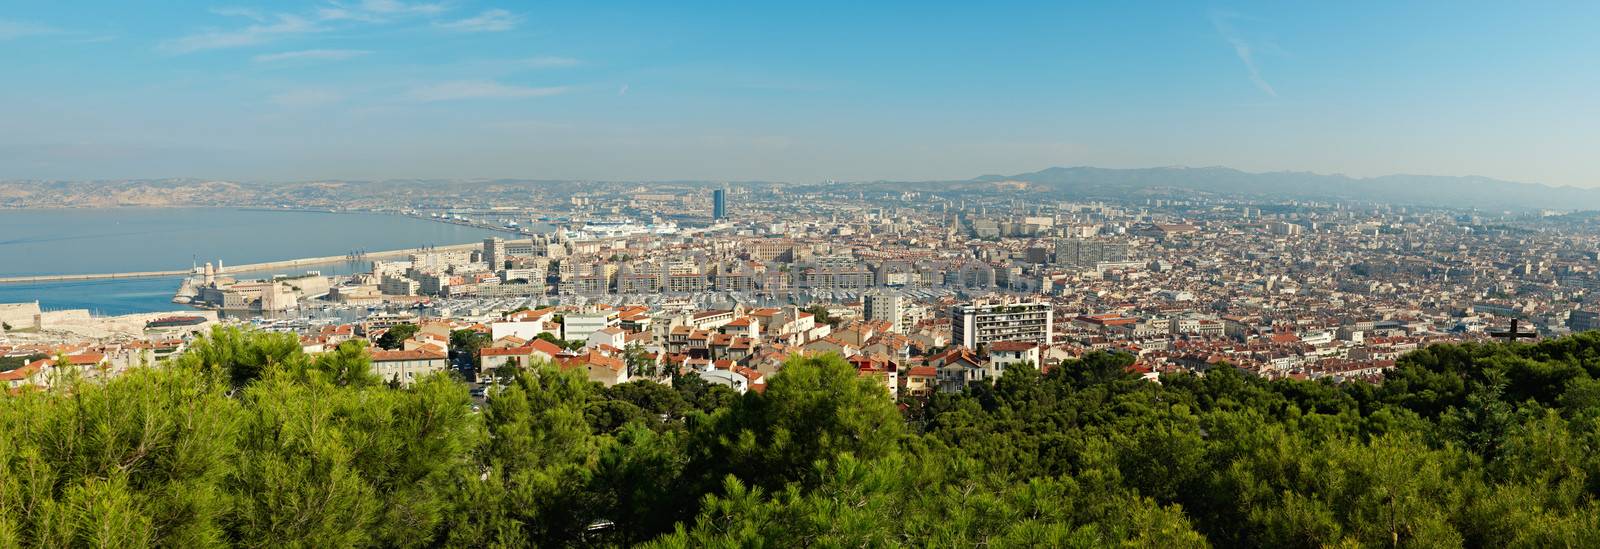 Marseille panorama by ecobo